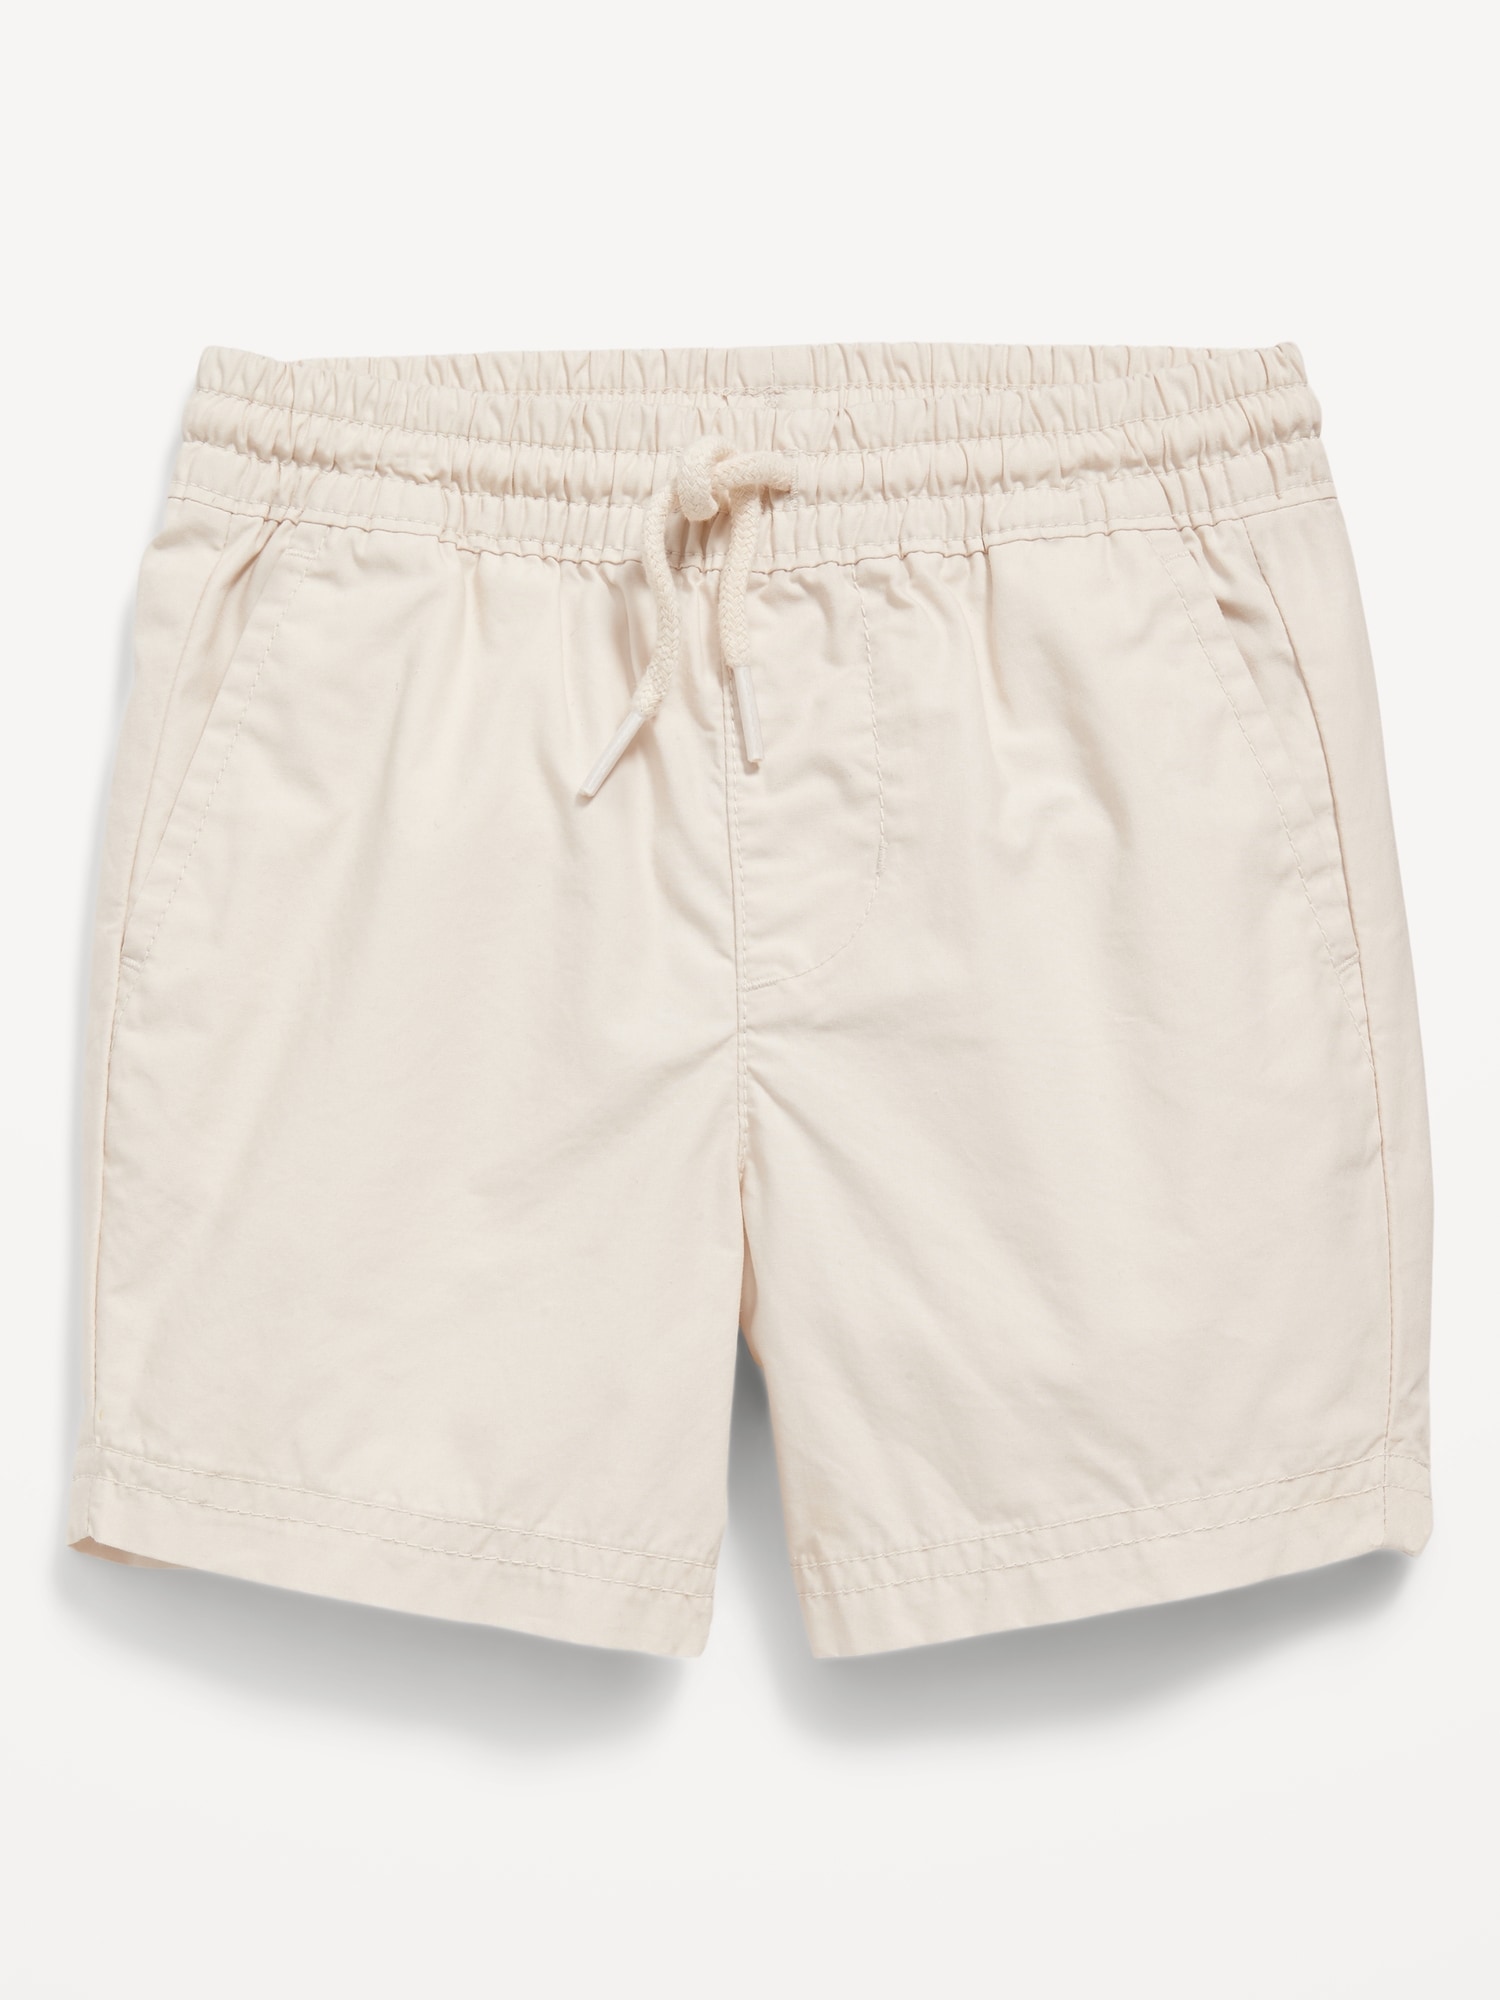 Functional-Drawstring Poplin Shorts for Toddler Boys | Old Navy